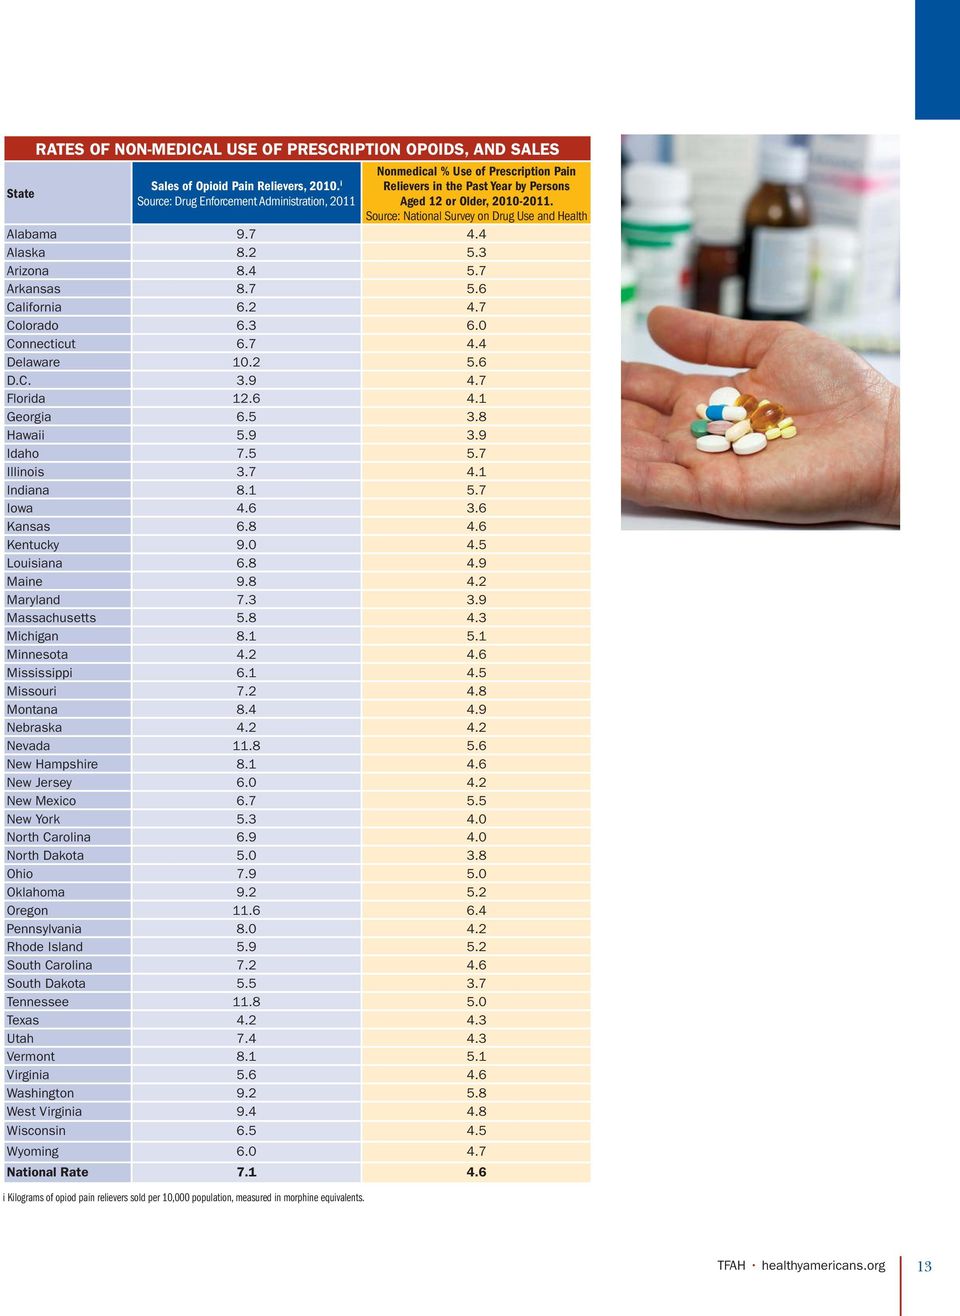 Source: National Survey on Drug Use and Health Alabama 9.7 4.4 Alaska 8.2 5.3 Arizona 8.4 5.7 Arkansas 8.7 5.6 California 6.2 4.7 Colorado 6.3 6.0 Connecticut 6.7 4.4 Delaware 10.2 5.6 D.C. 3.9 4.